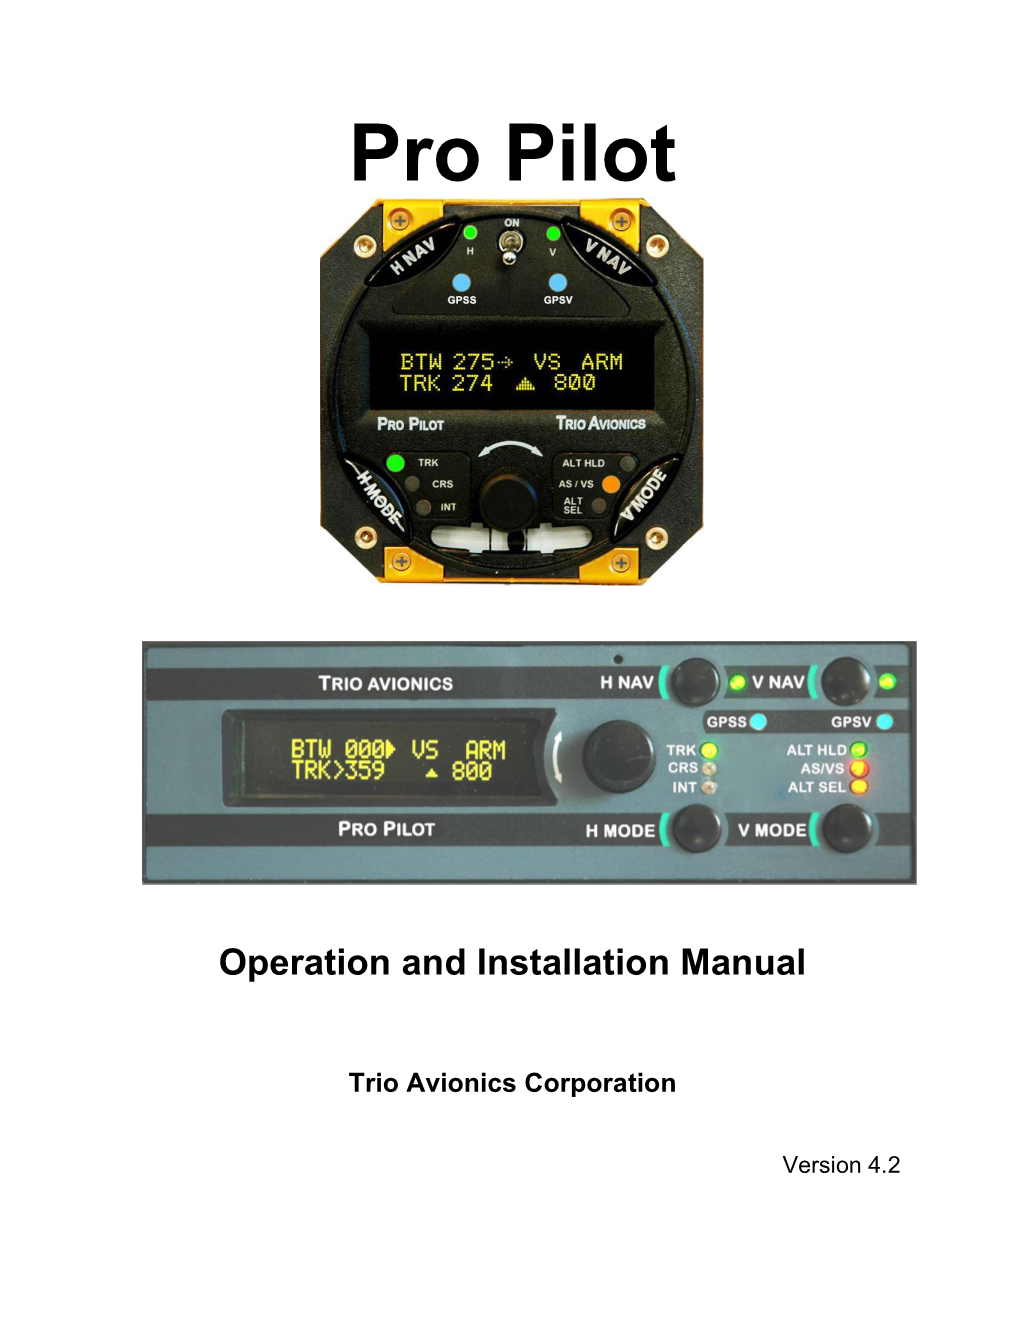 Pro Pilot Manual 4.2 2